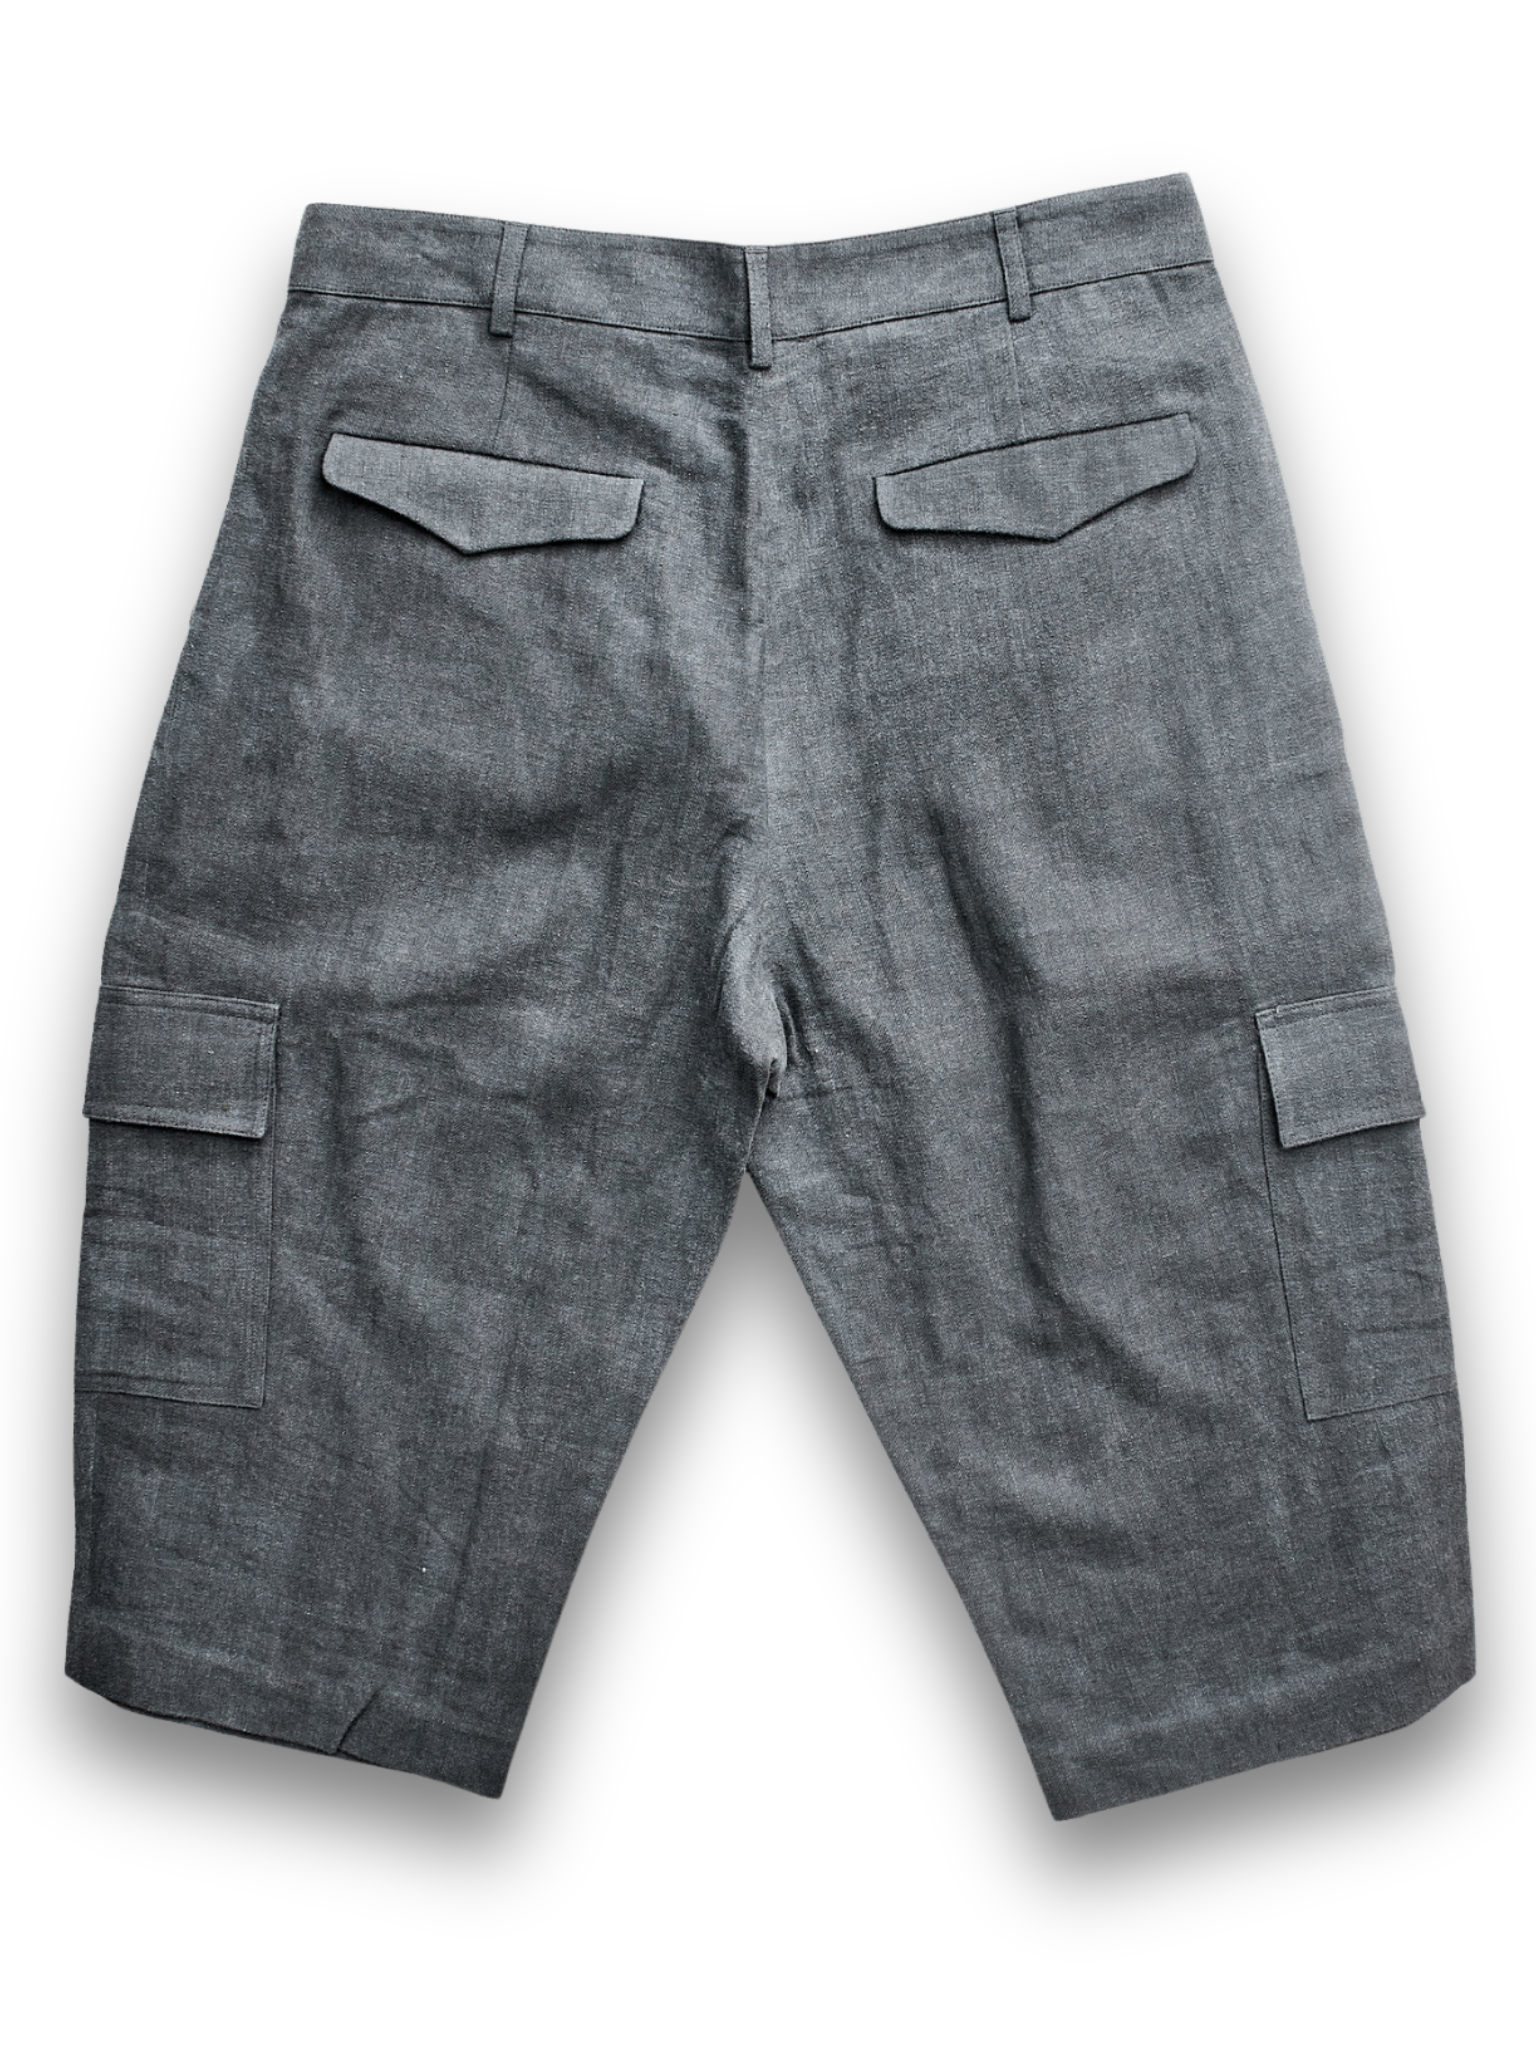 Military Grey Cargo Shorts with Pockets